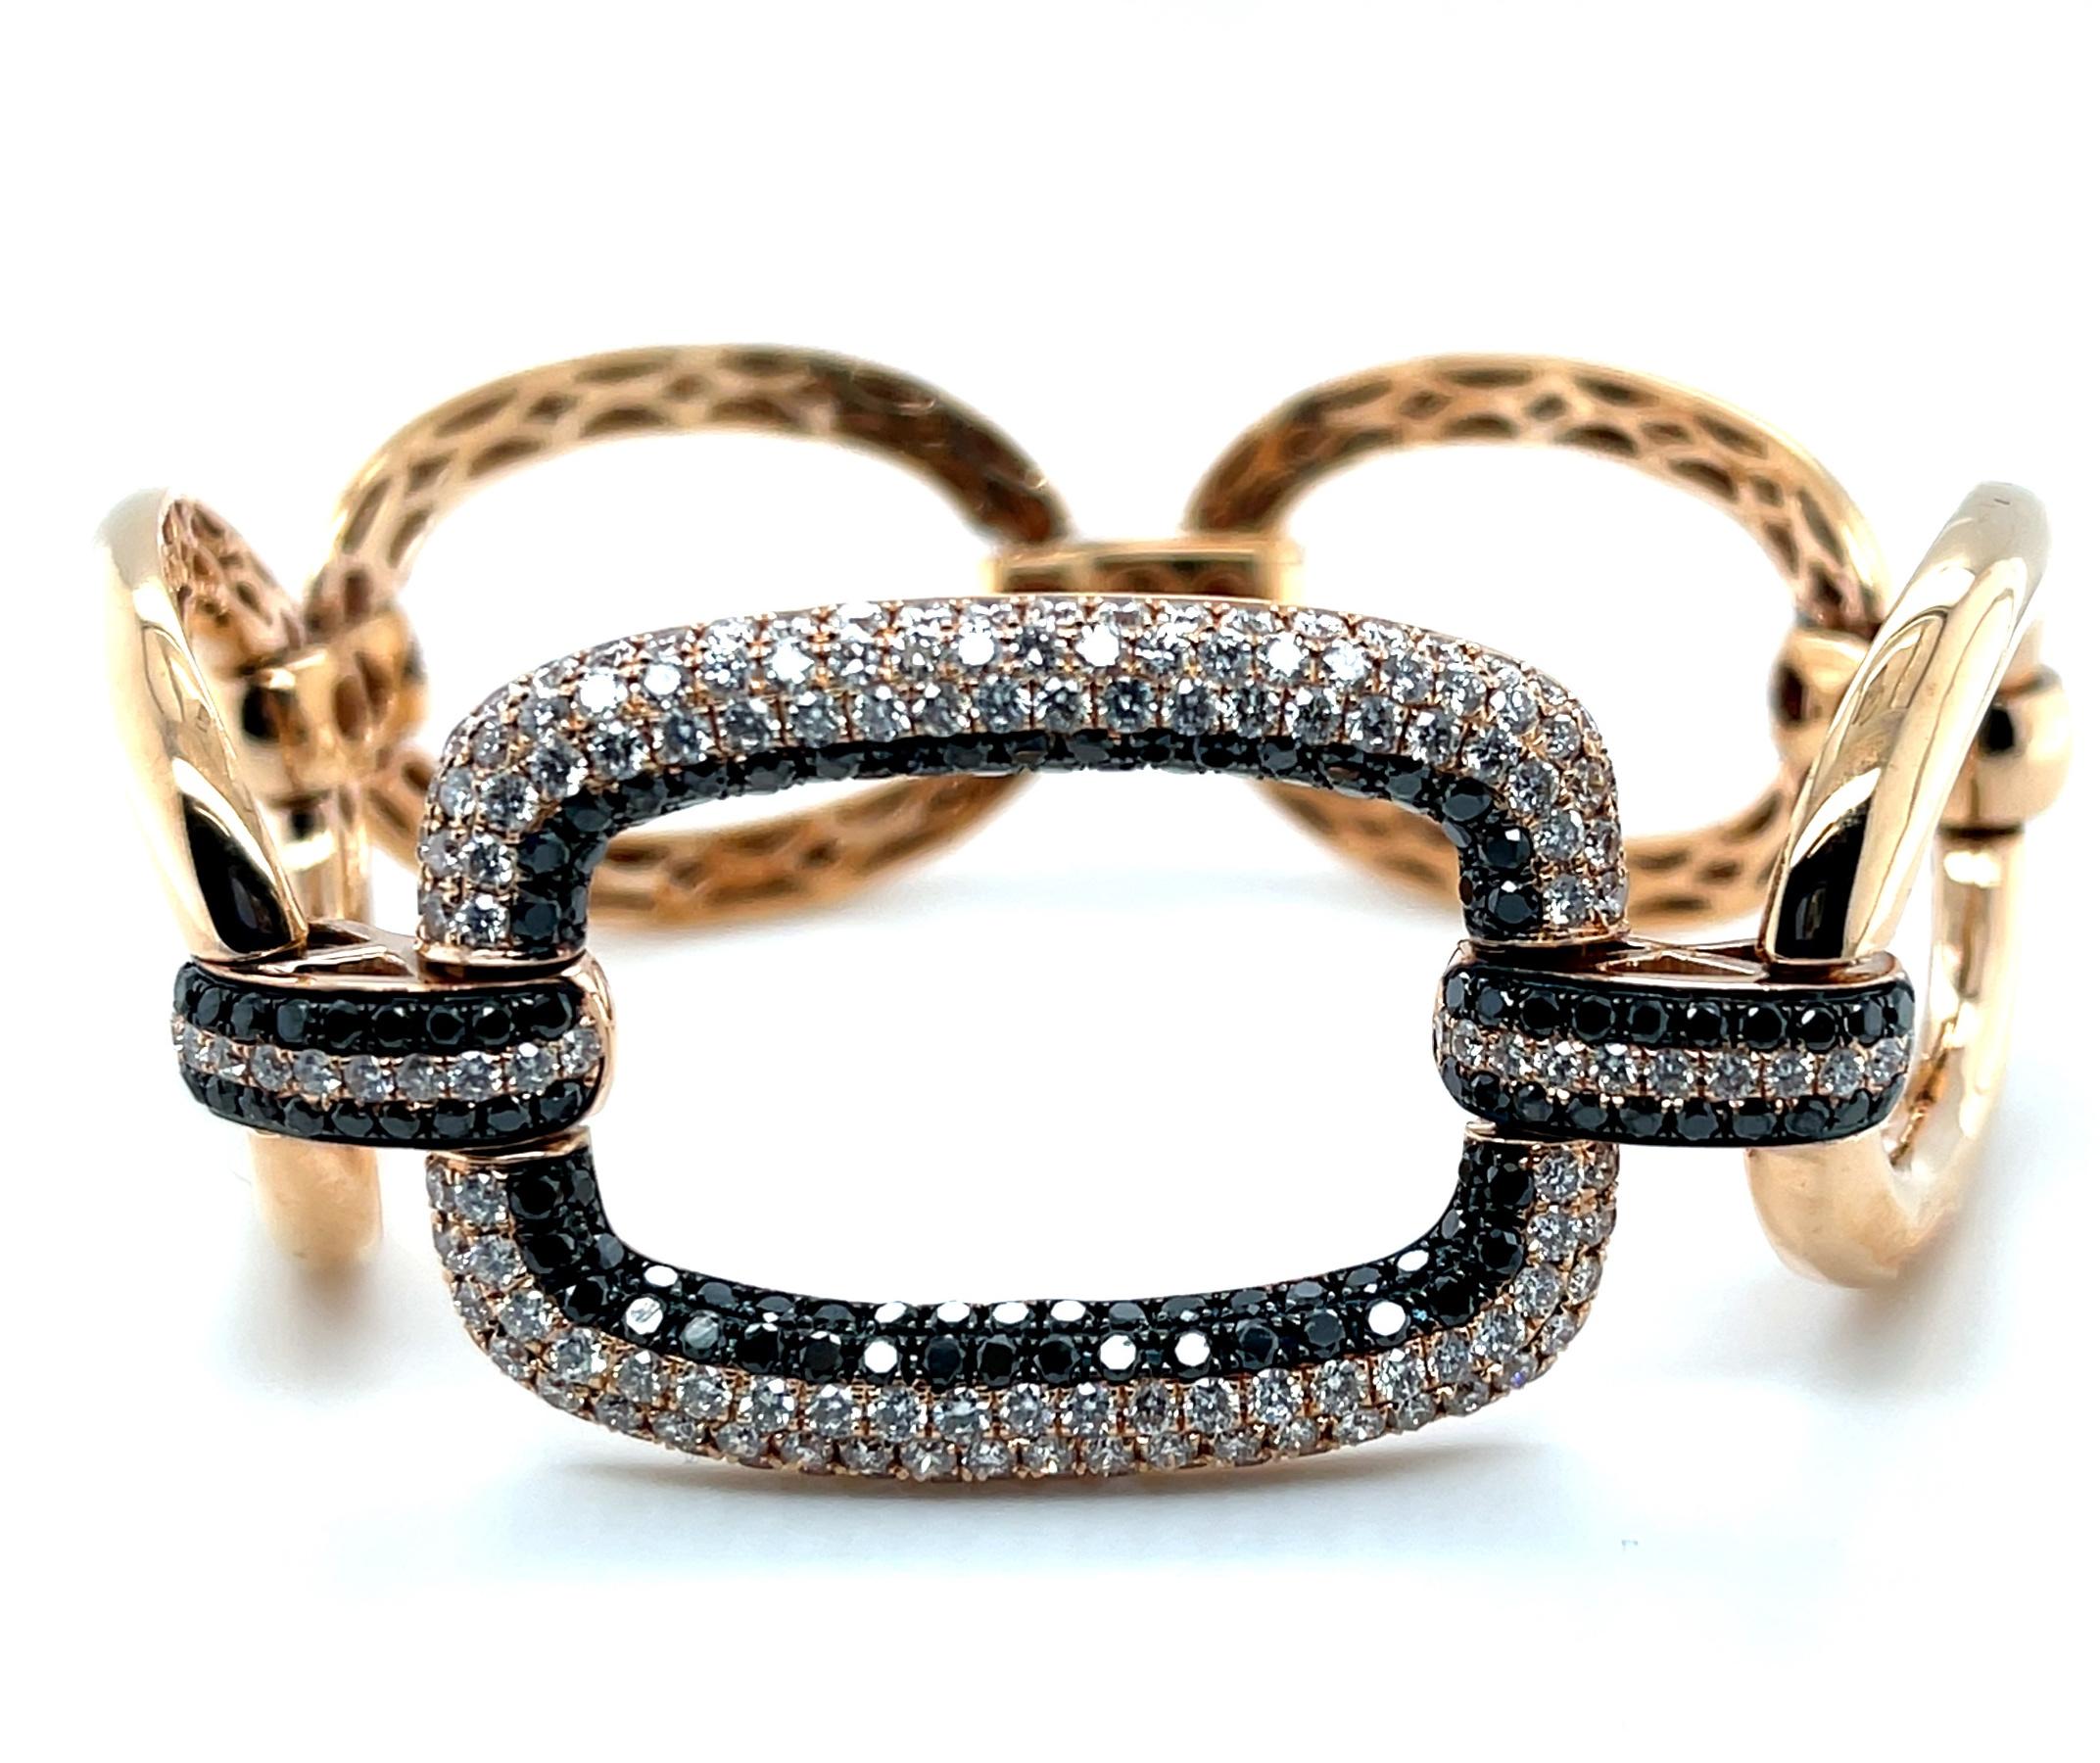 Women's Black and White Diamond Link Bracelet in Rose Gold, 3.52 Carat Total For Sale